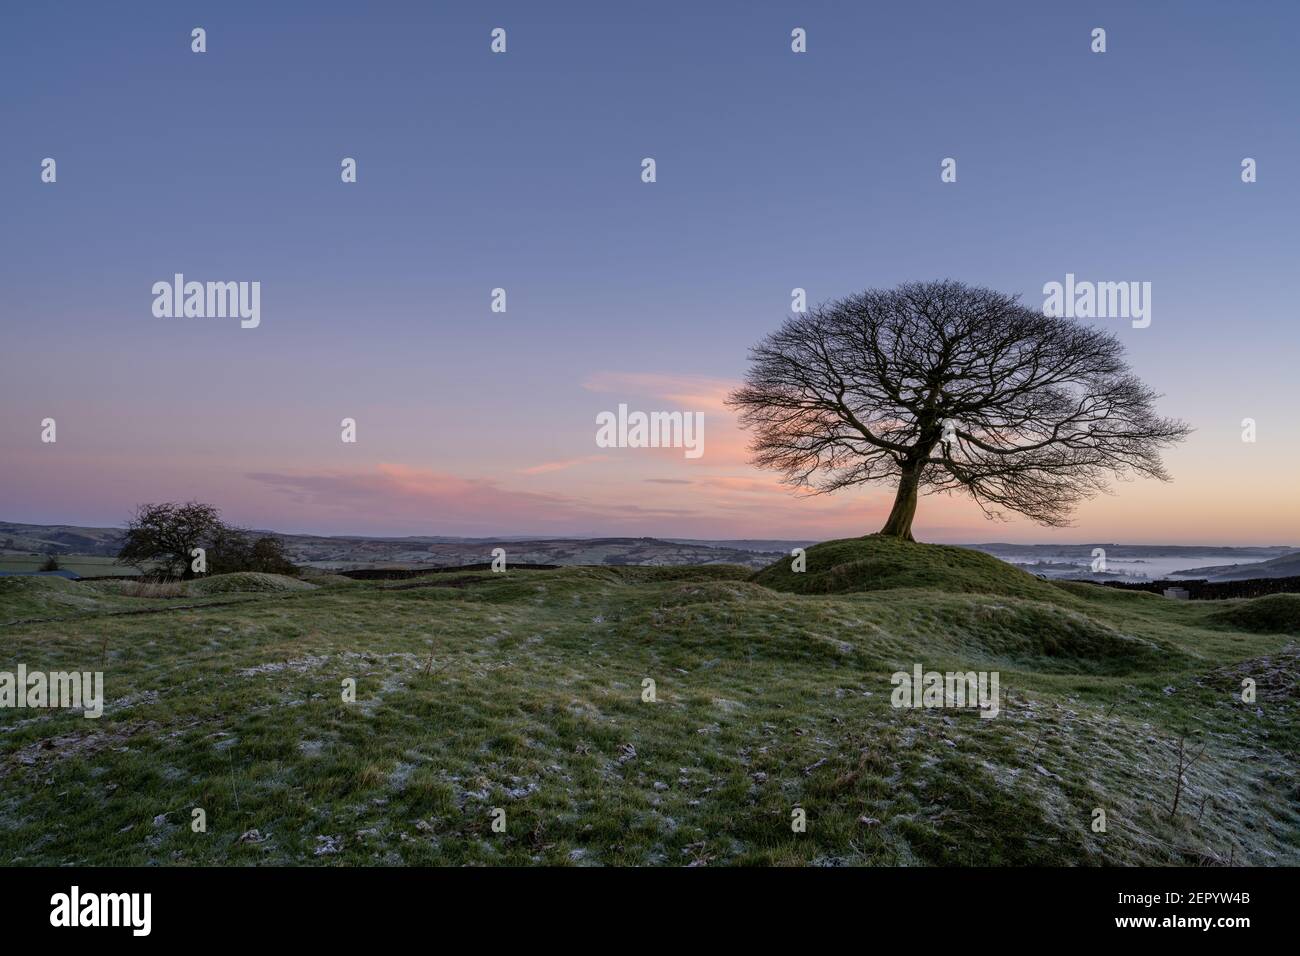 Lone tree at sunrise on Grindon Moor, Staffordshire, White Peak, Peak District National Park, UK. Stock Photo